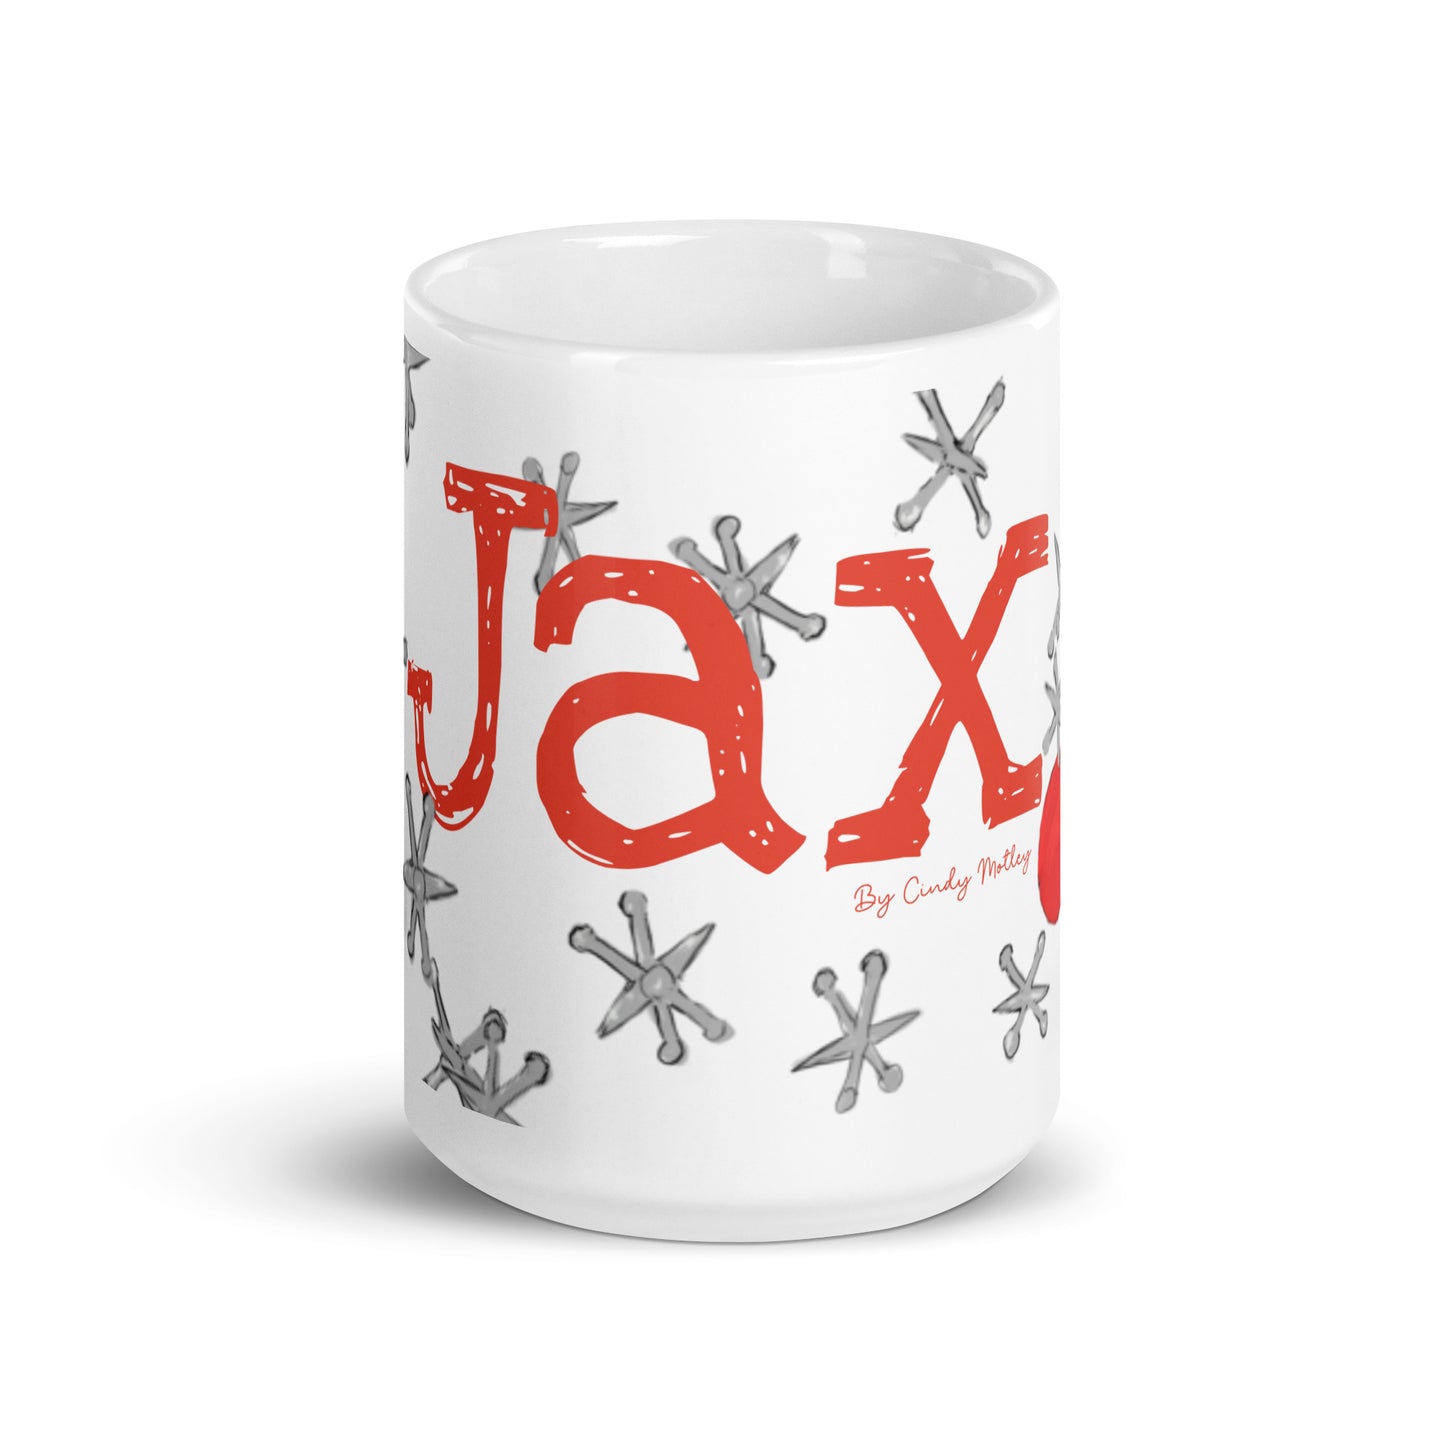 Jax By Cindy Motley White glossy mug